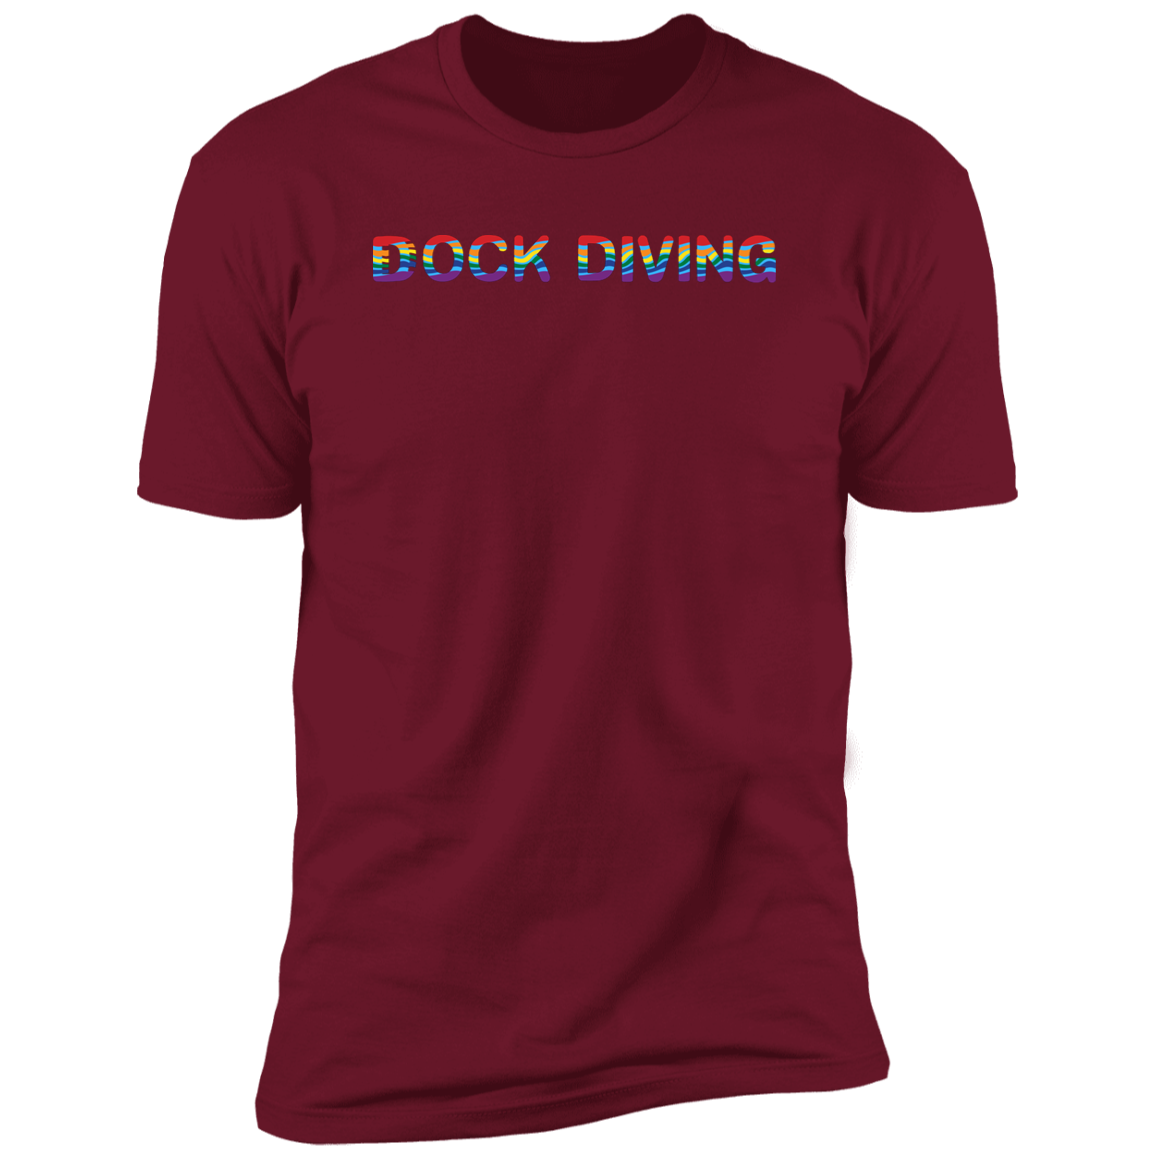 Dock Diving Pride Dock diving t-shirt, dog pride dock diving shirt for humans, in cardinal red